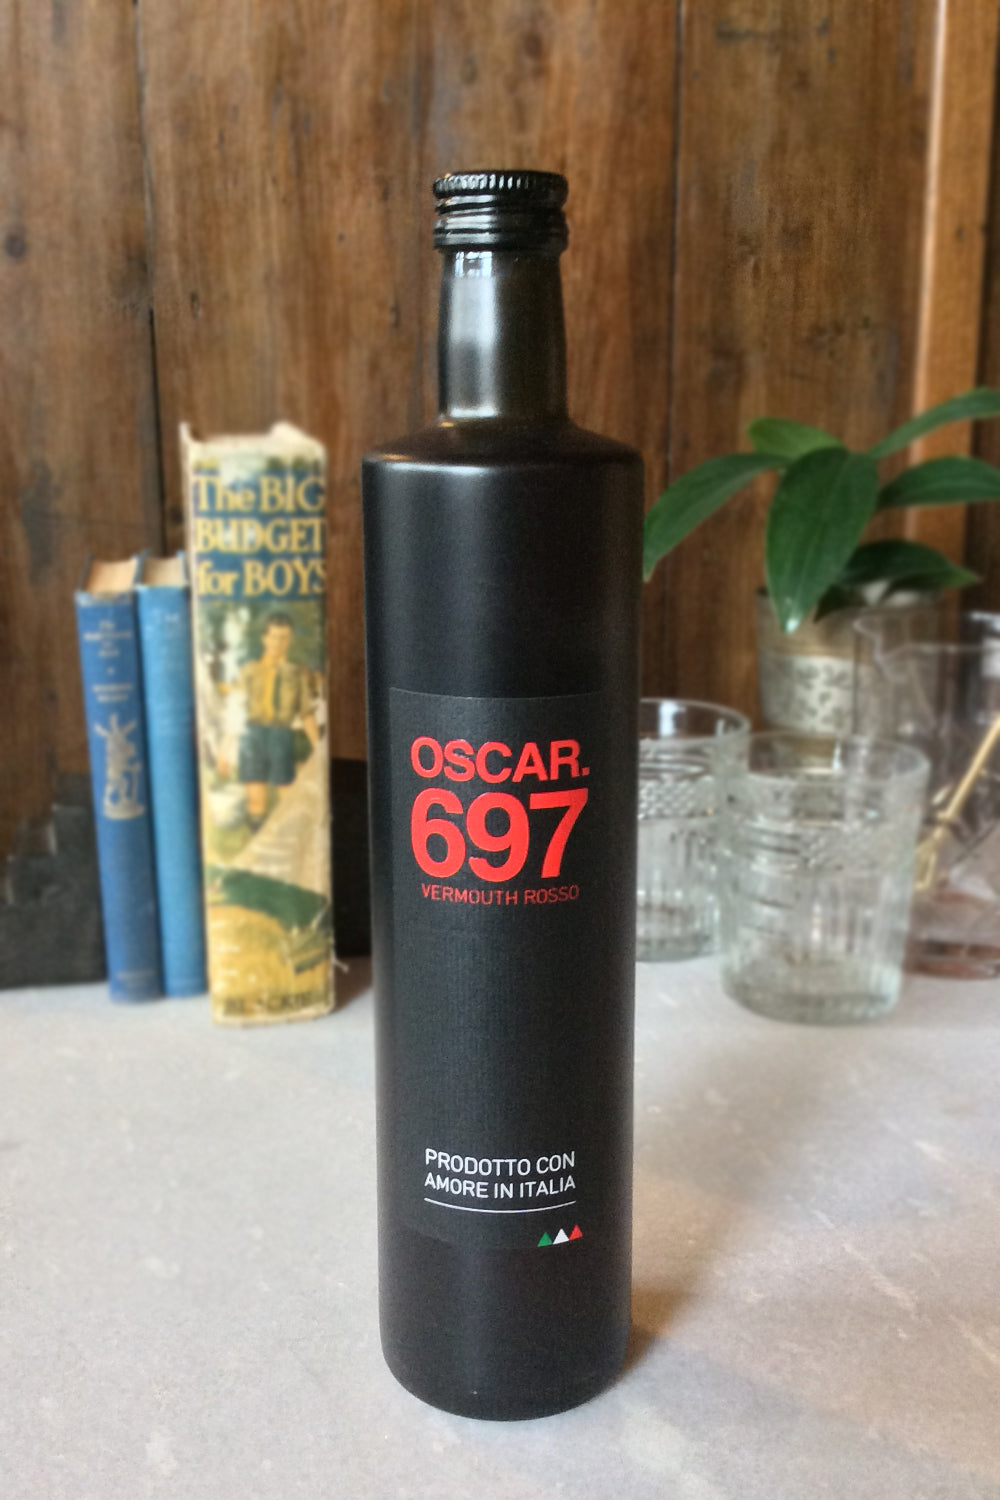 Oscar 697 Rosso Vermouth